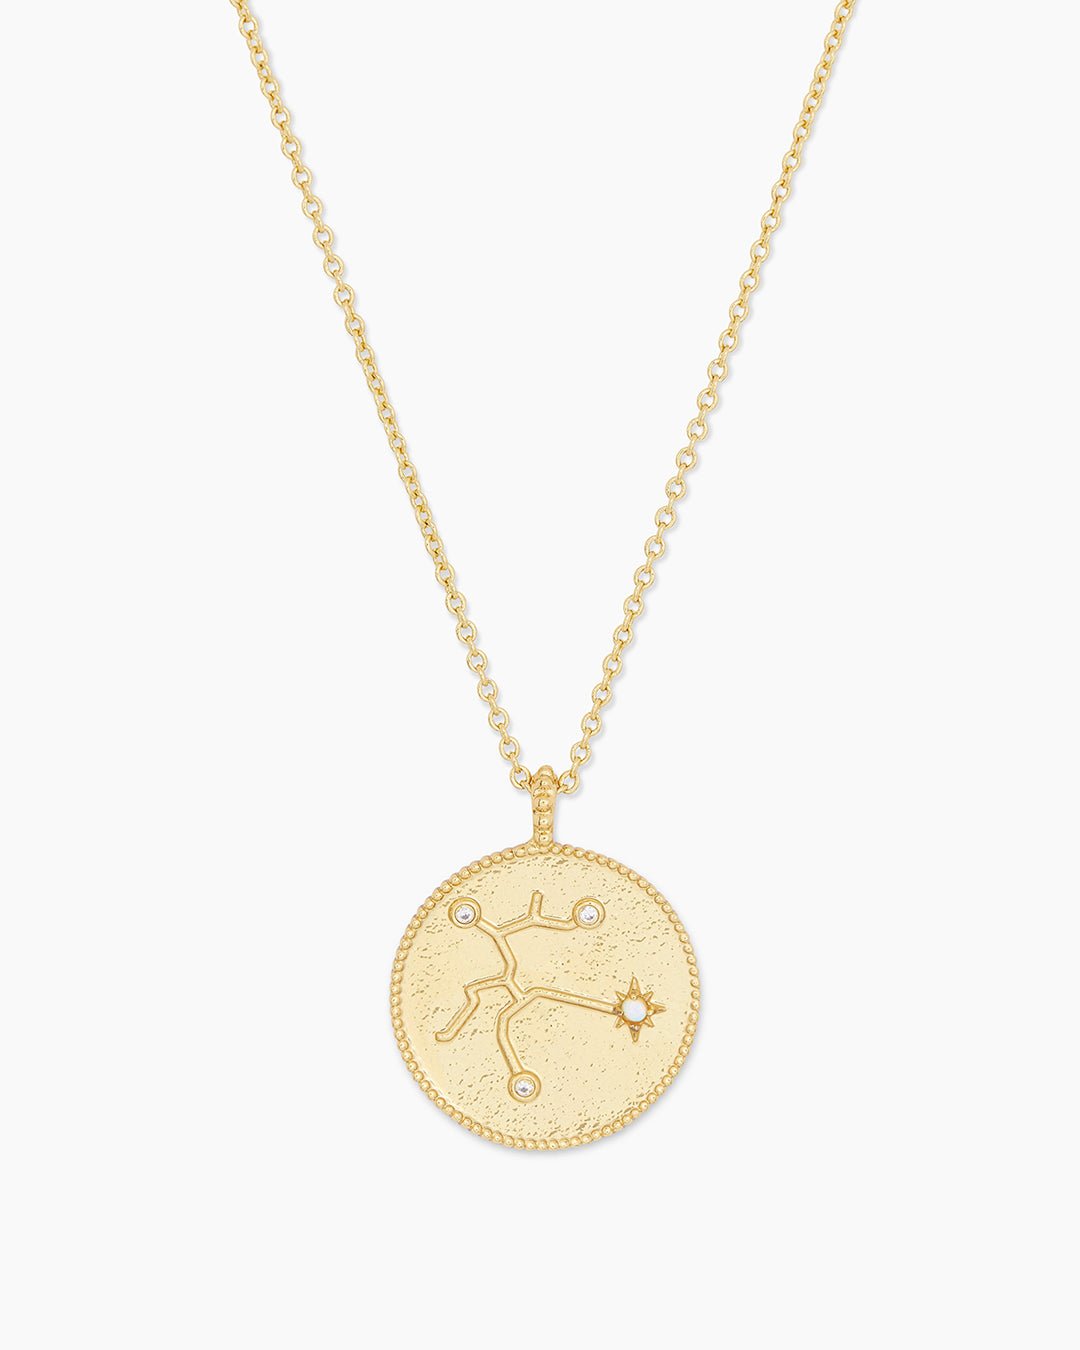  Astrology Coin Necklace (Sagittarius) || option::Gold Plated, Sagittarius